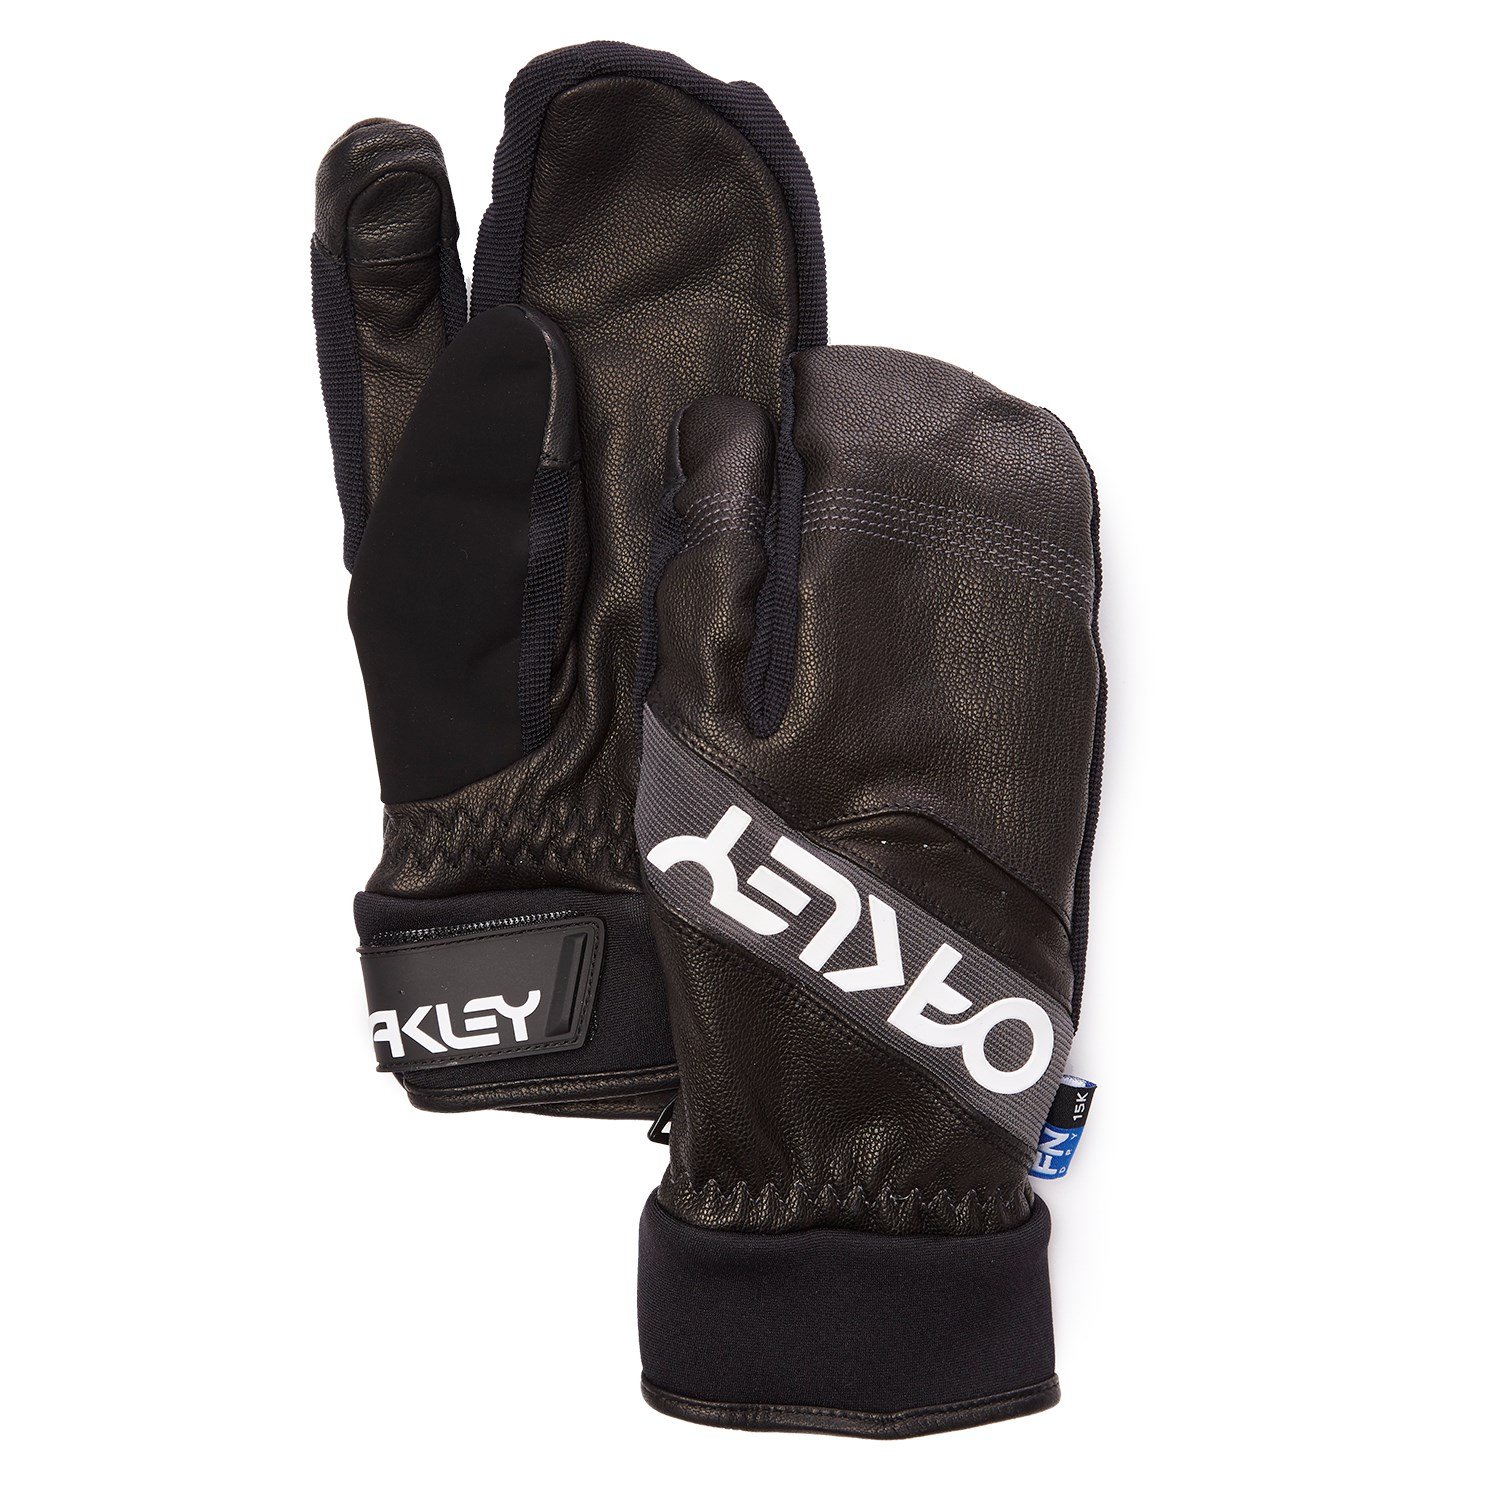 oakley gloves ski